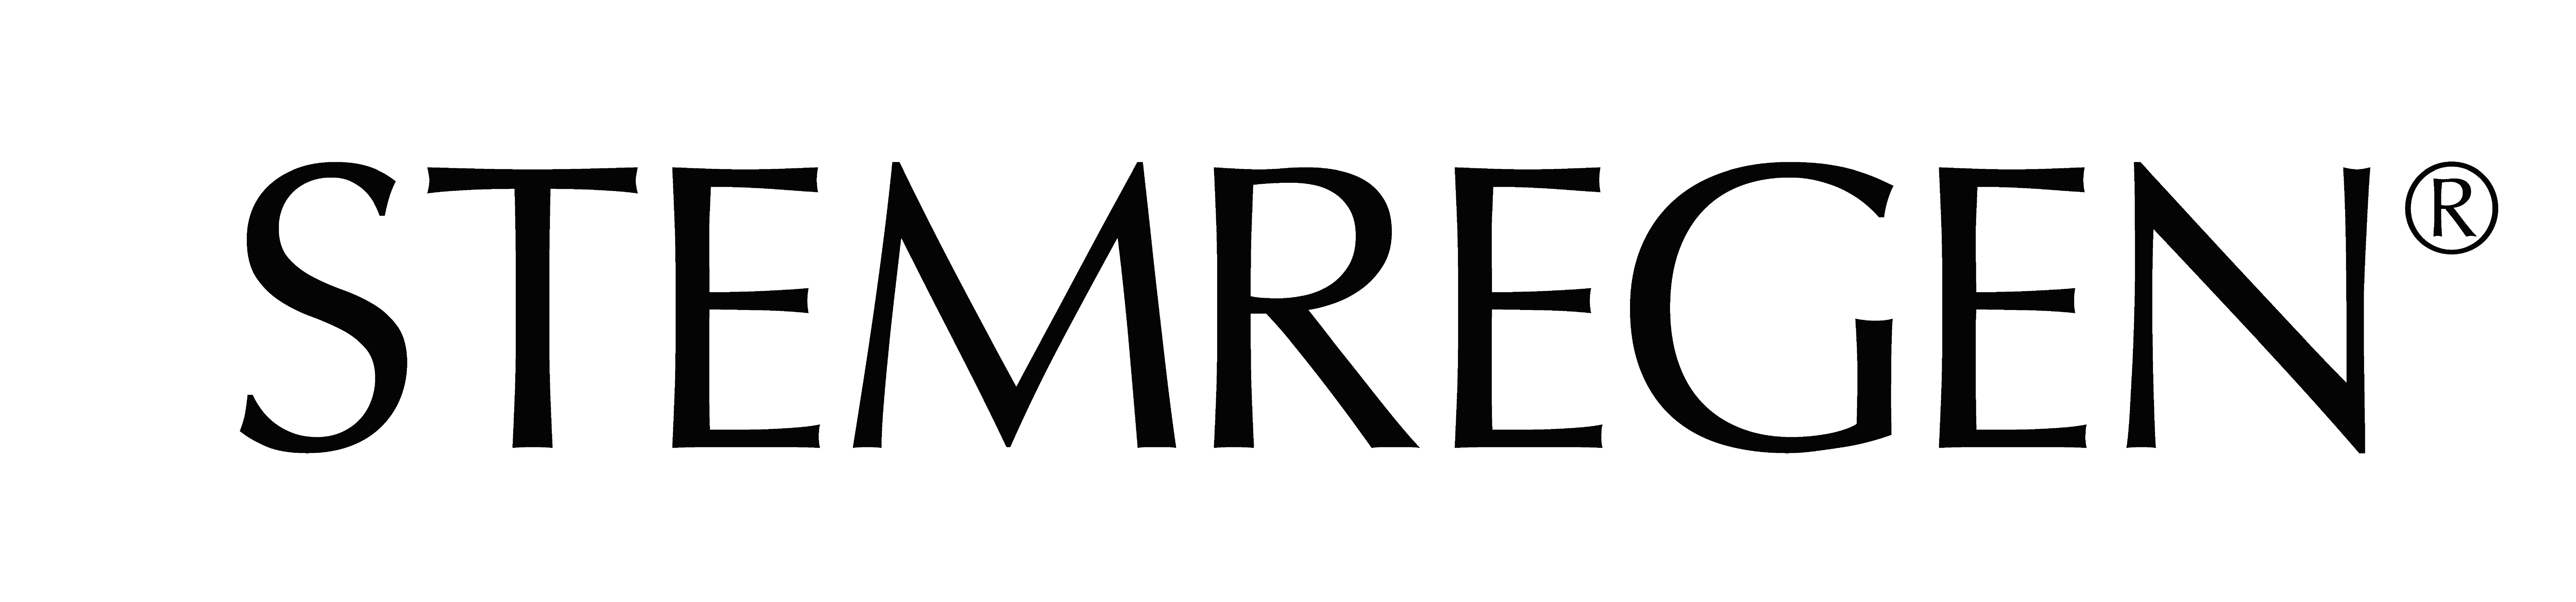 Stemregen Logo Optimized